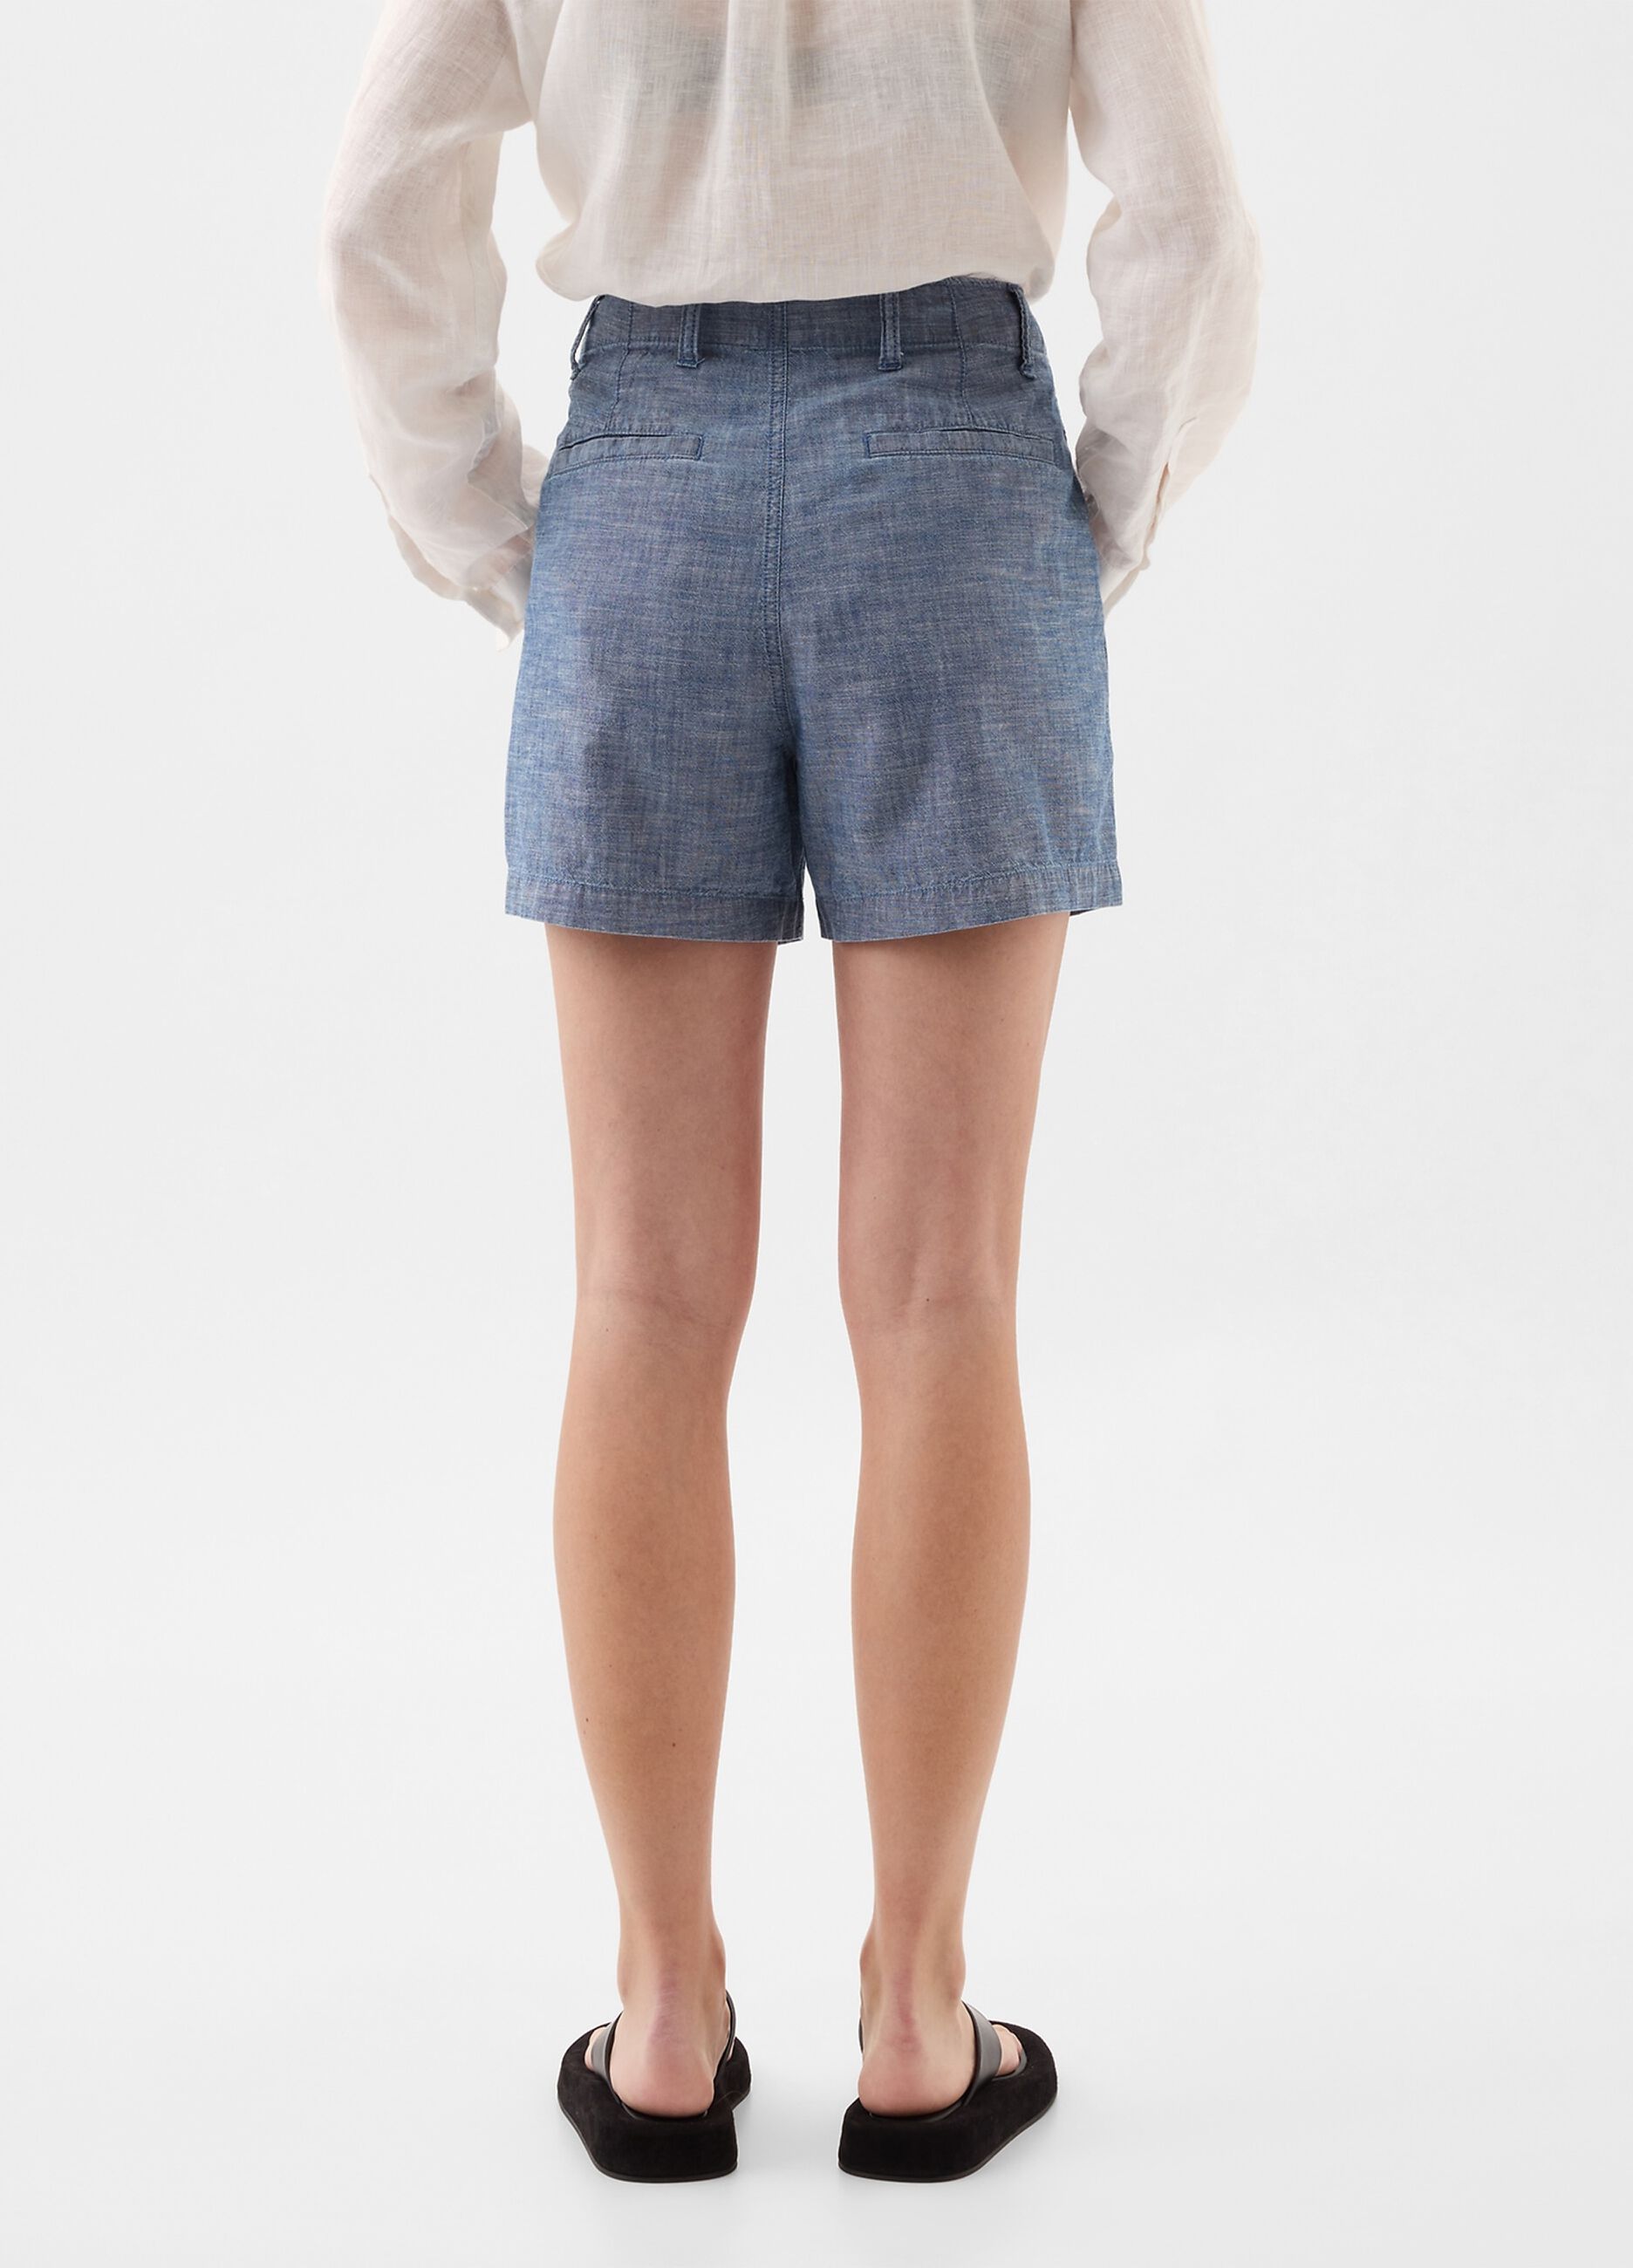 Chambray cotton shorts